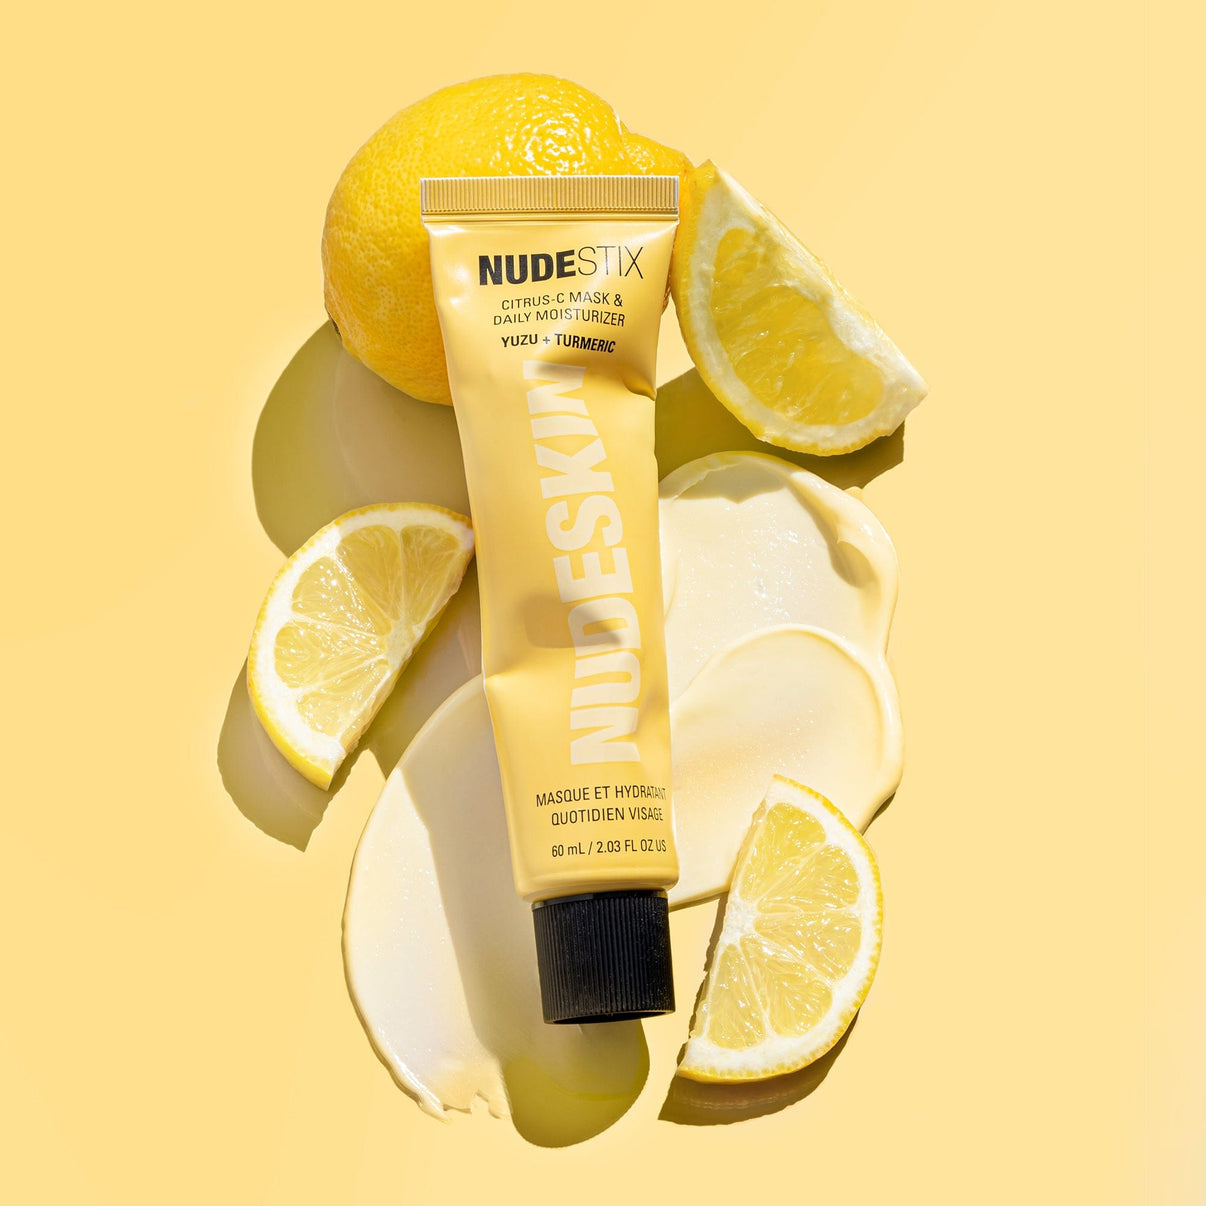 Nude Essentials for makeup: citrus-c mask & daily moisturizer